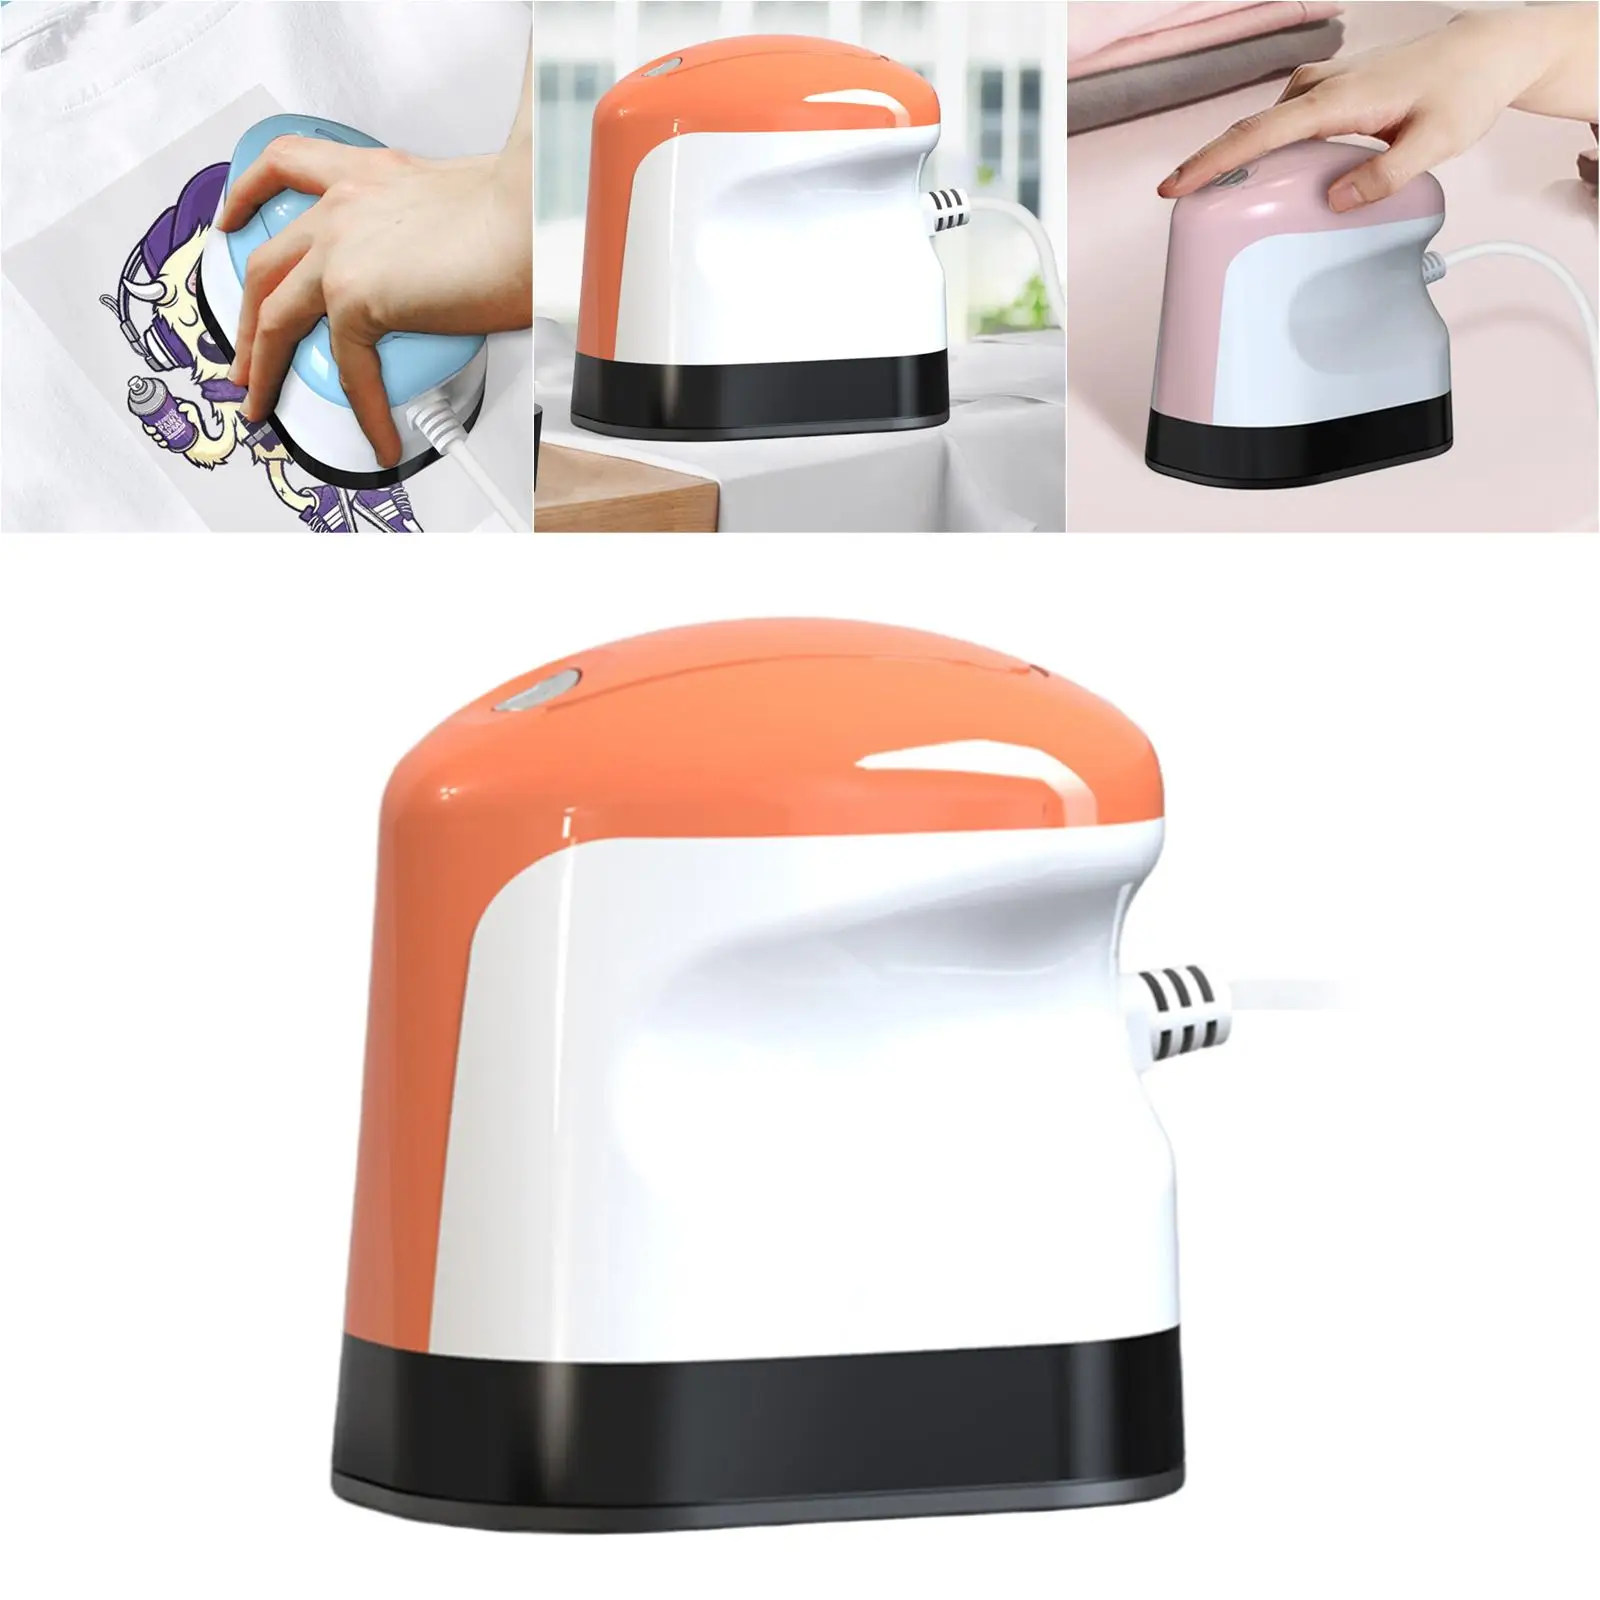 Mini Heat Press Machine Easy to Use DIY Iron-On Transfer Maker for T-Shirt Mugs Bag